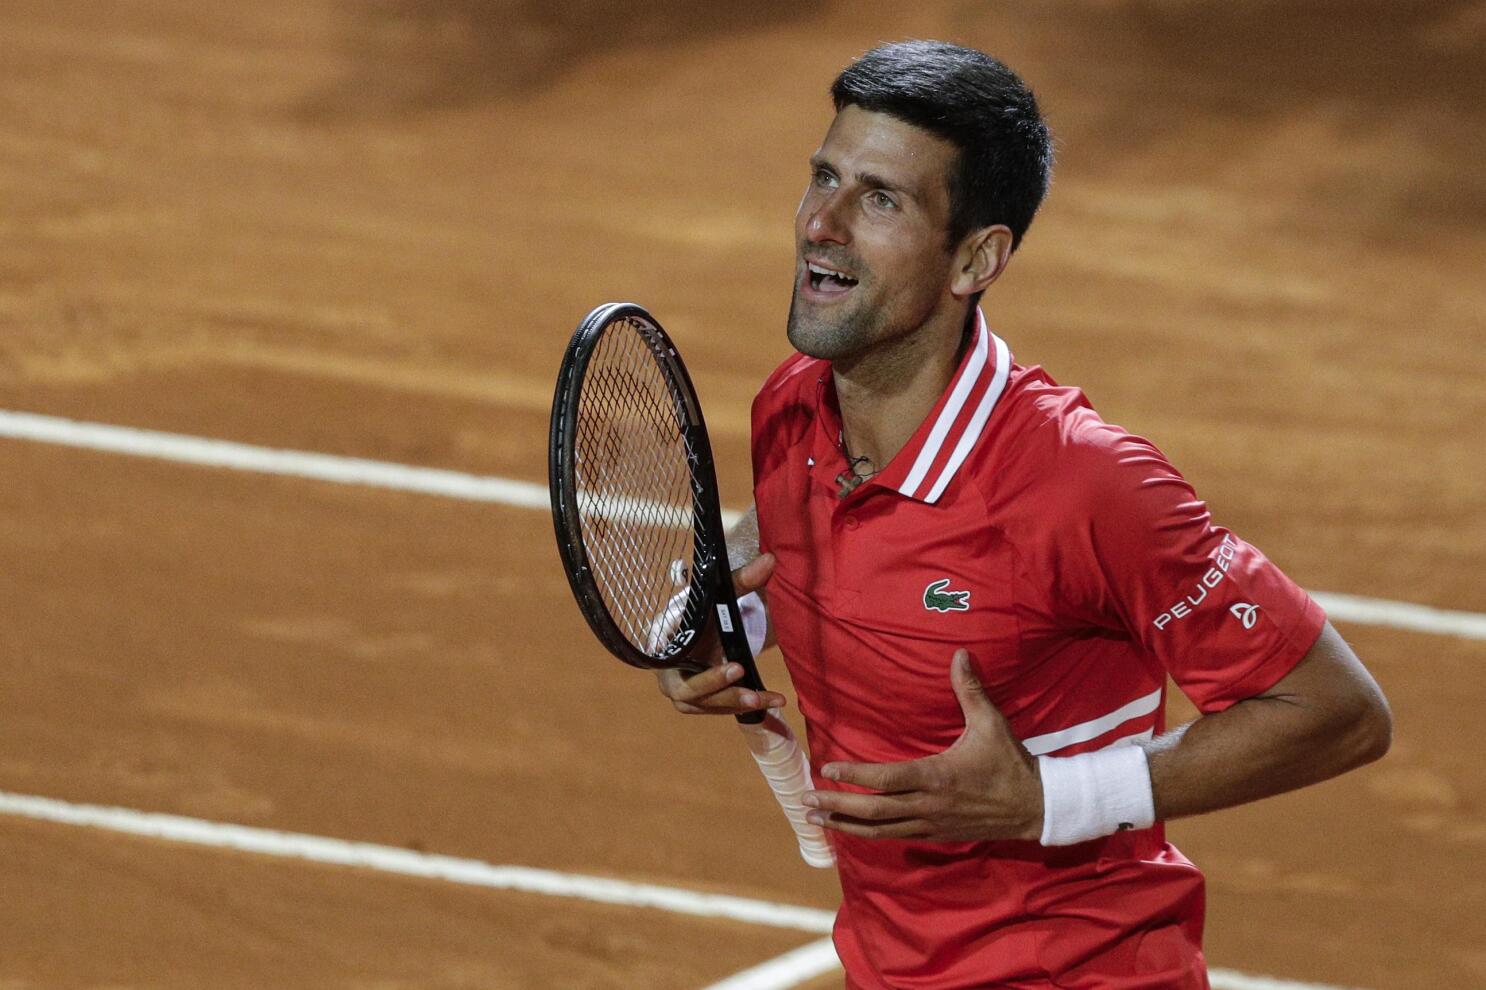 Novak Djokovic: World's number one tennis player to miss Miami